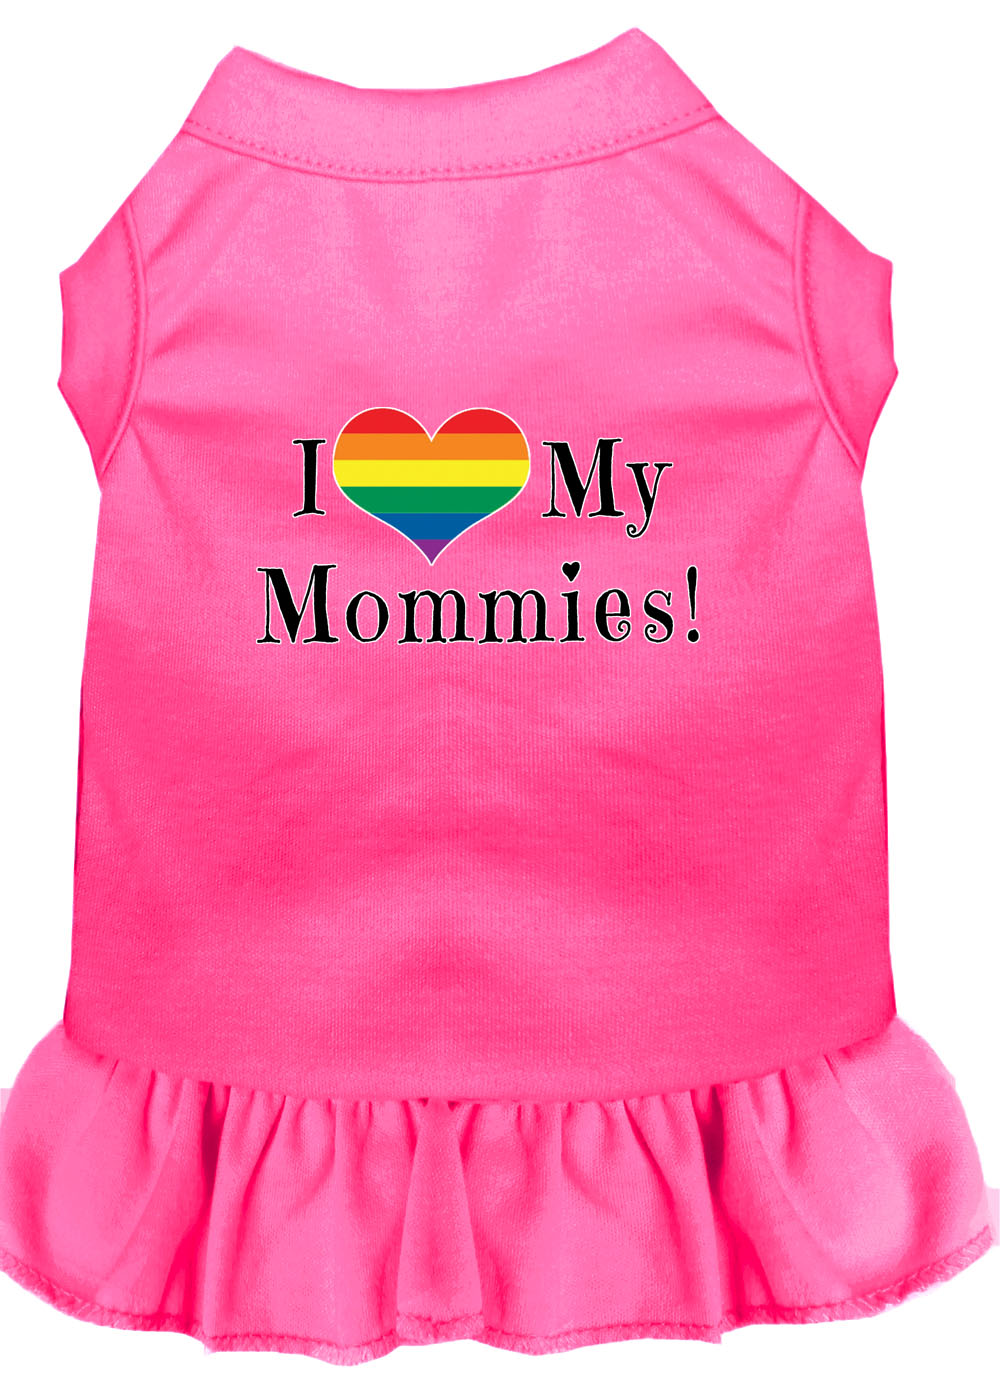 I Heart my Mommies Screen Print Dog Dress Bright Pink Sm